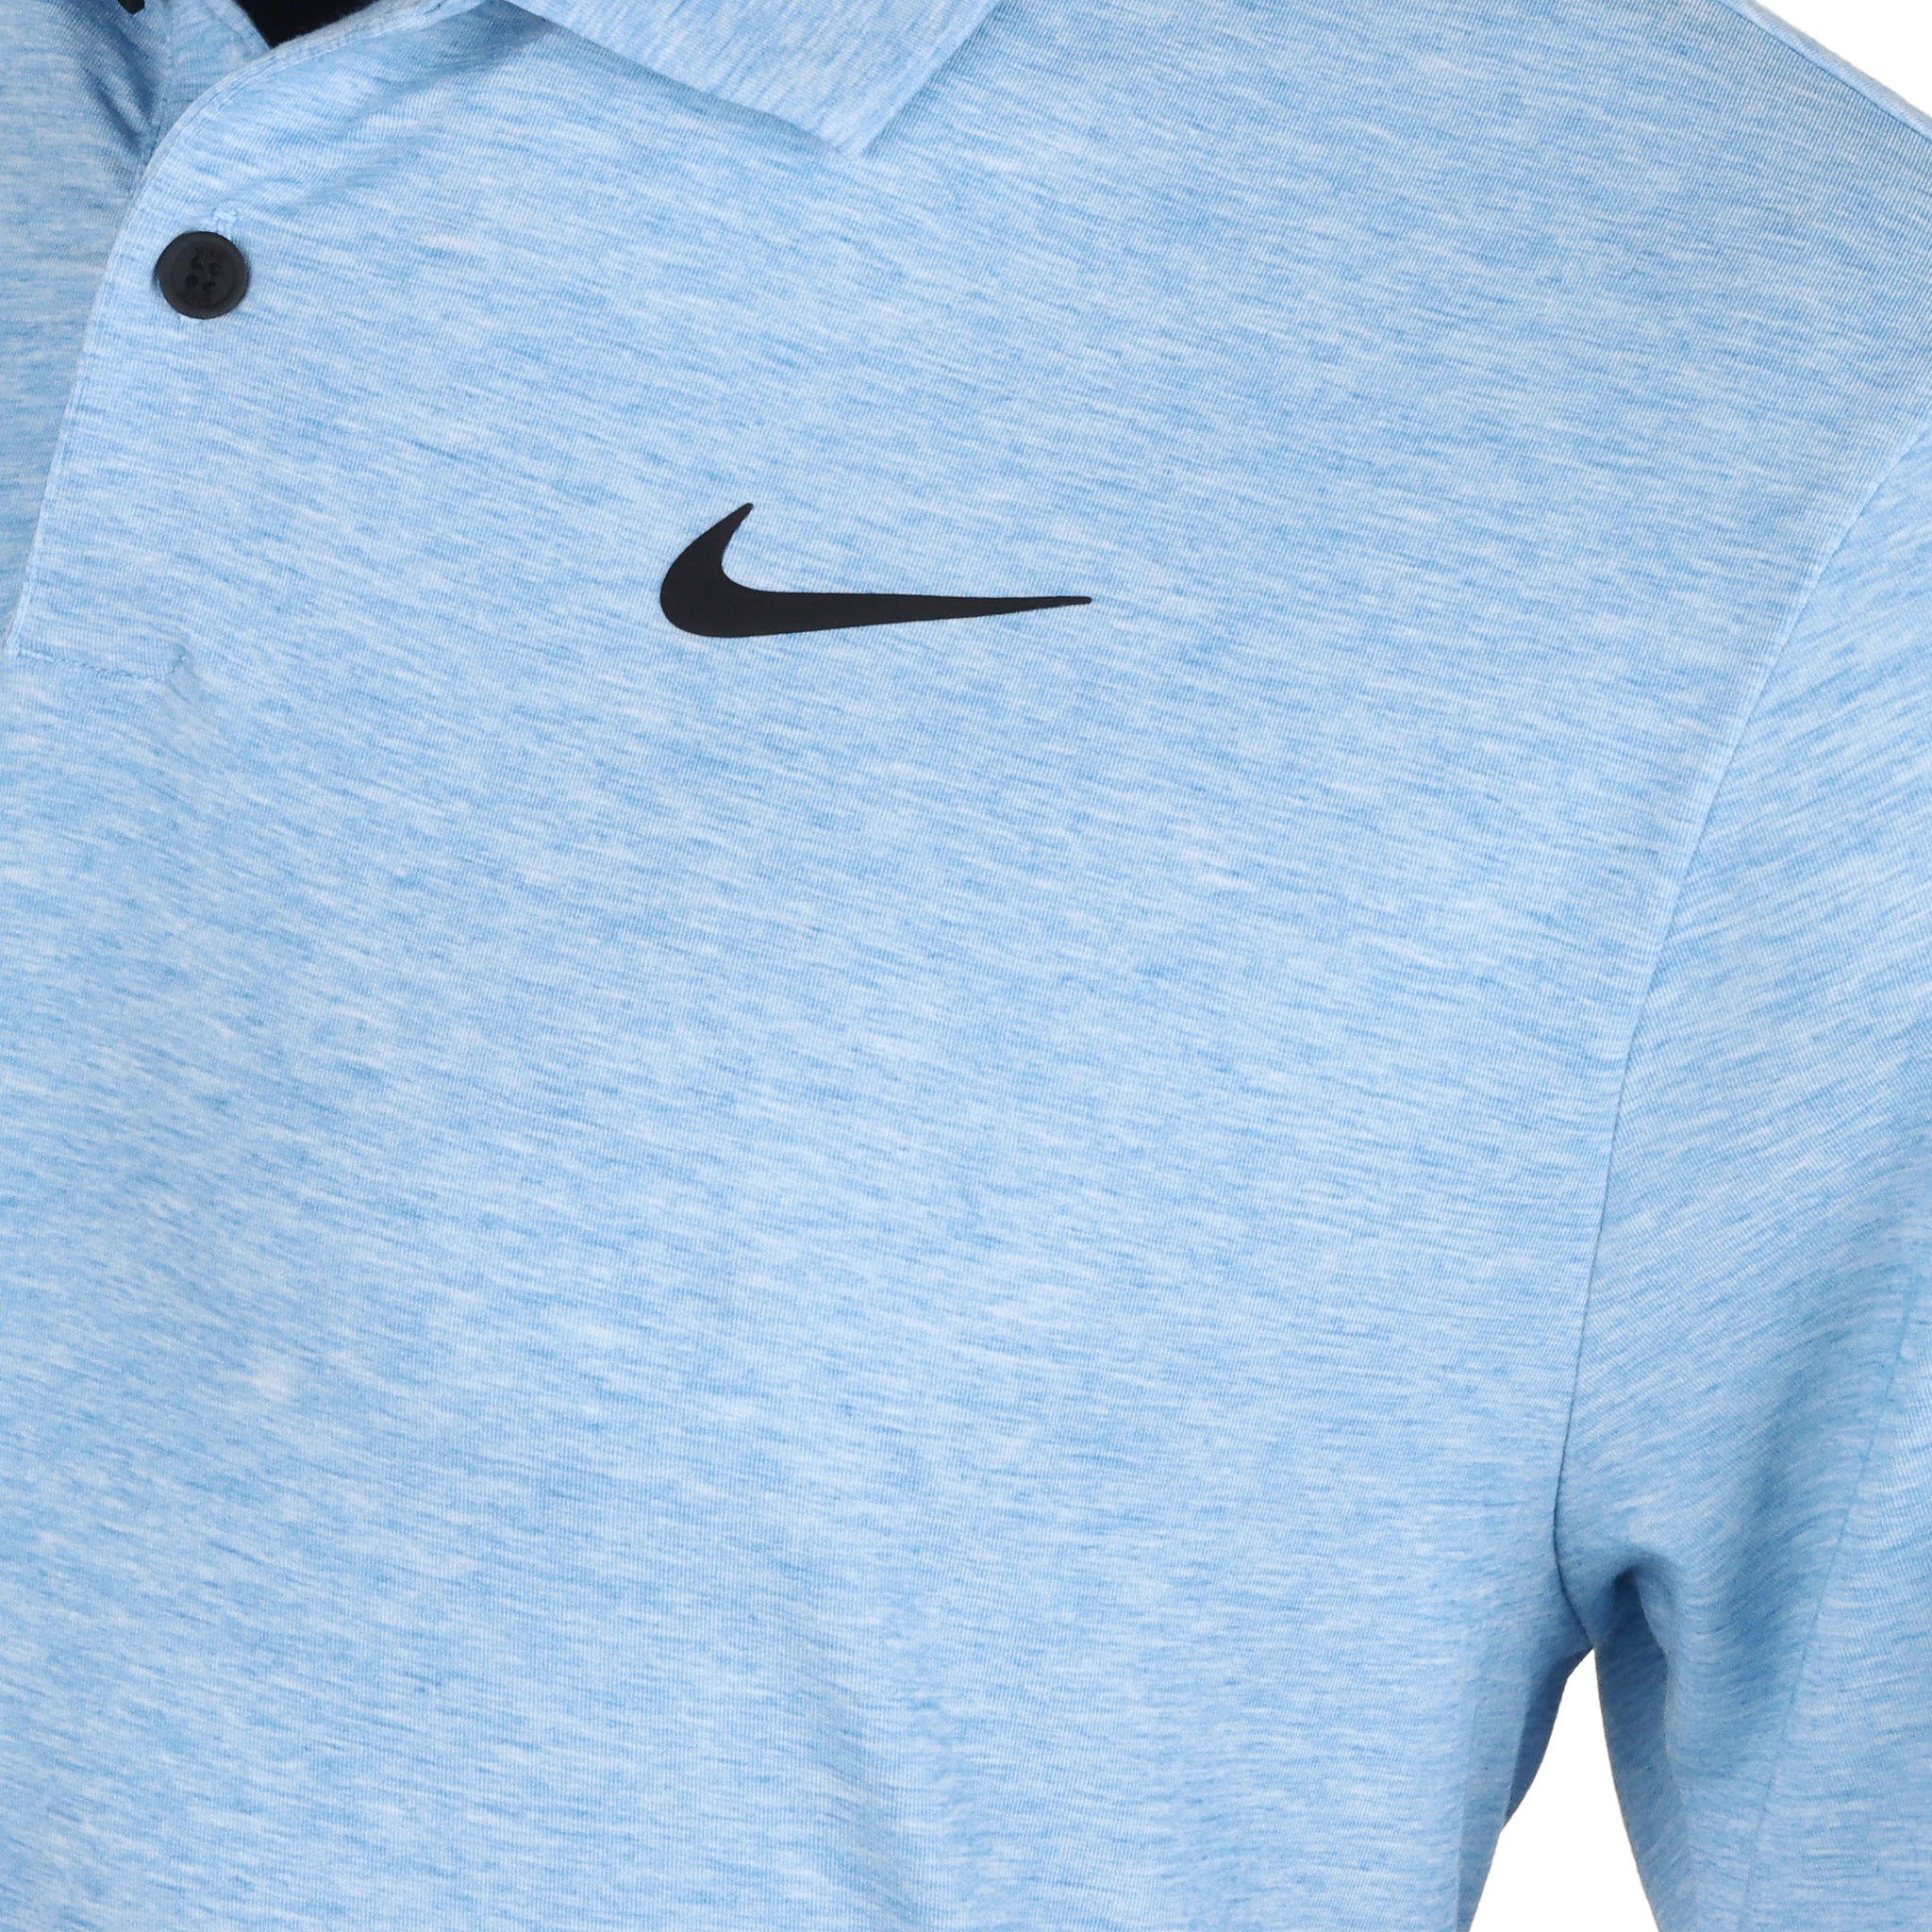 Nike Golf Dri-Fit Tour Heather Shirt